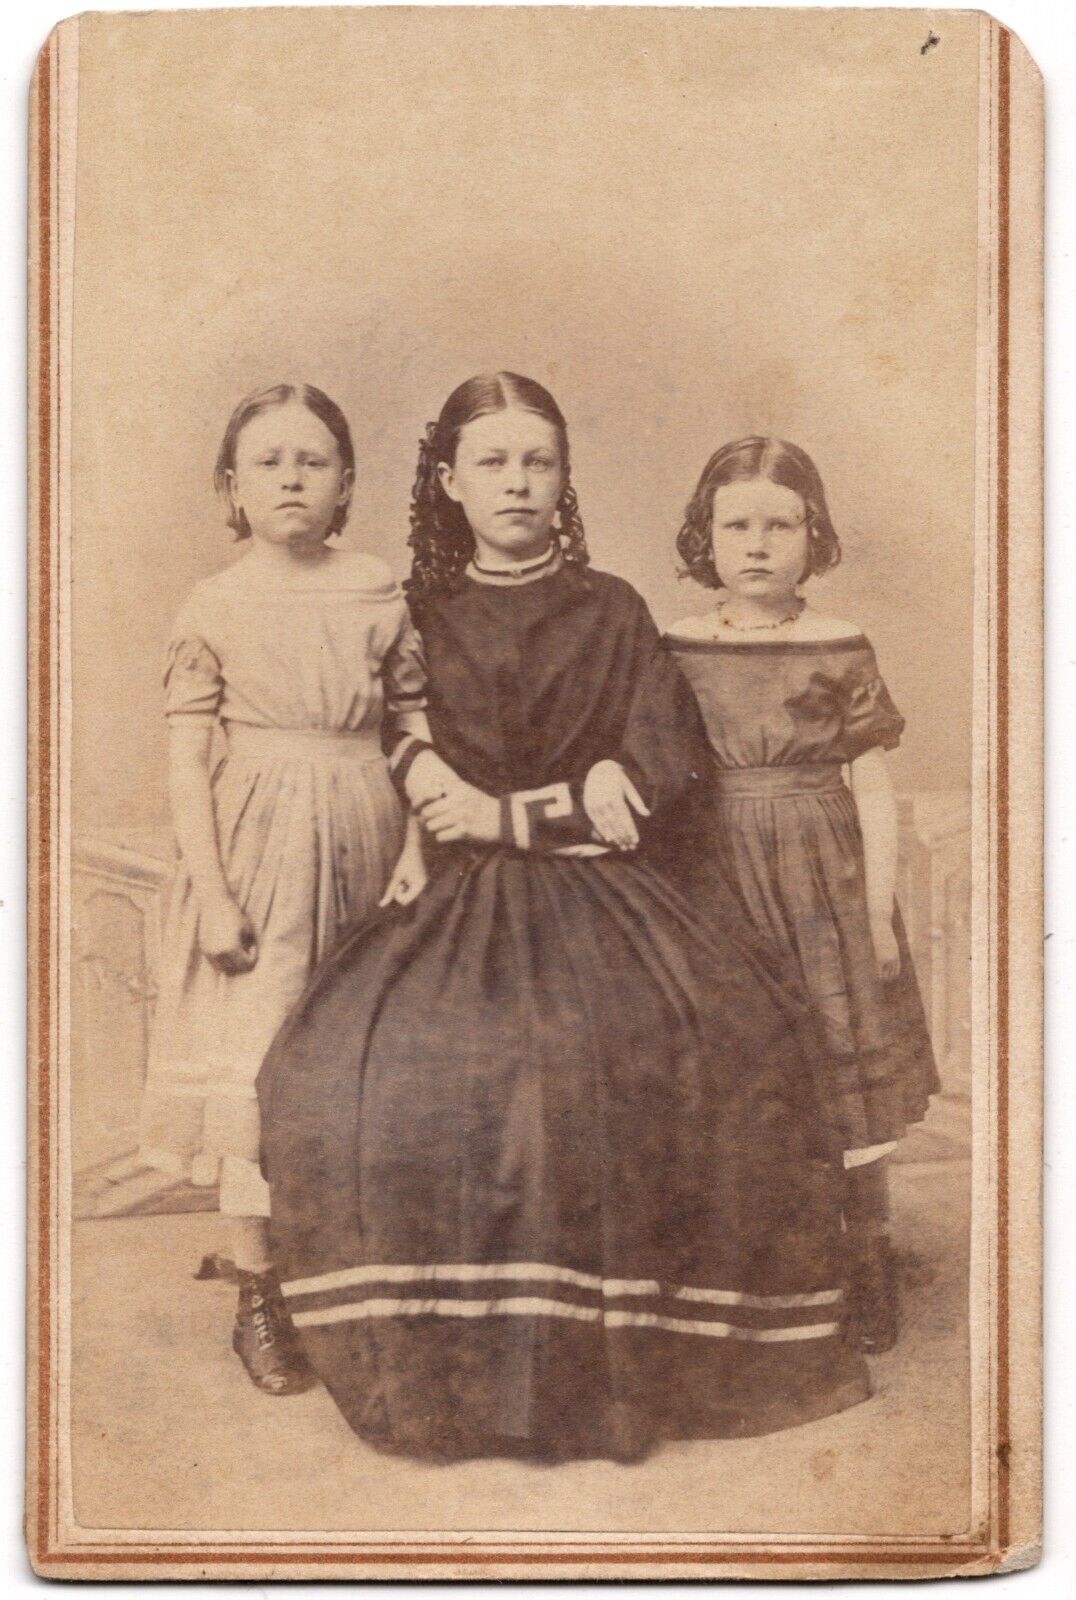 ANTIQUE CDV CIRCA 1860s THREE YOUNG SISTERS CIVIL WAR ERA MITCHELL ST. JOSEPH MO